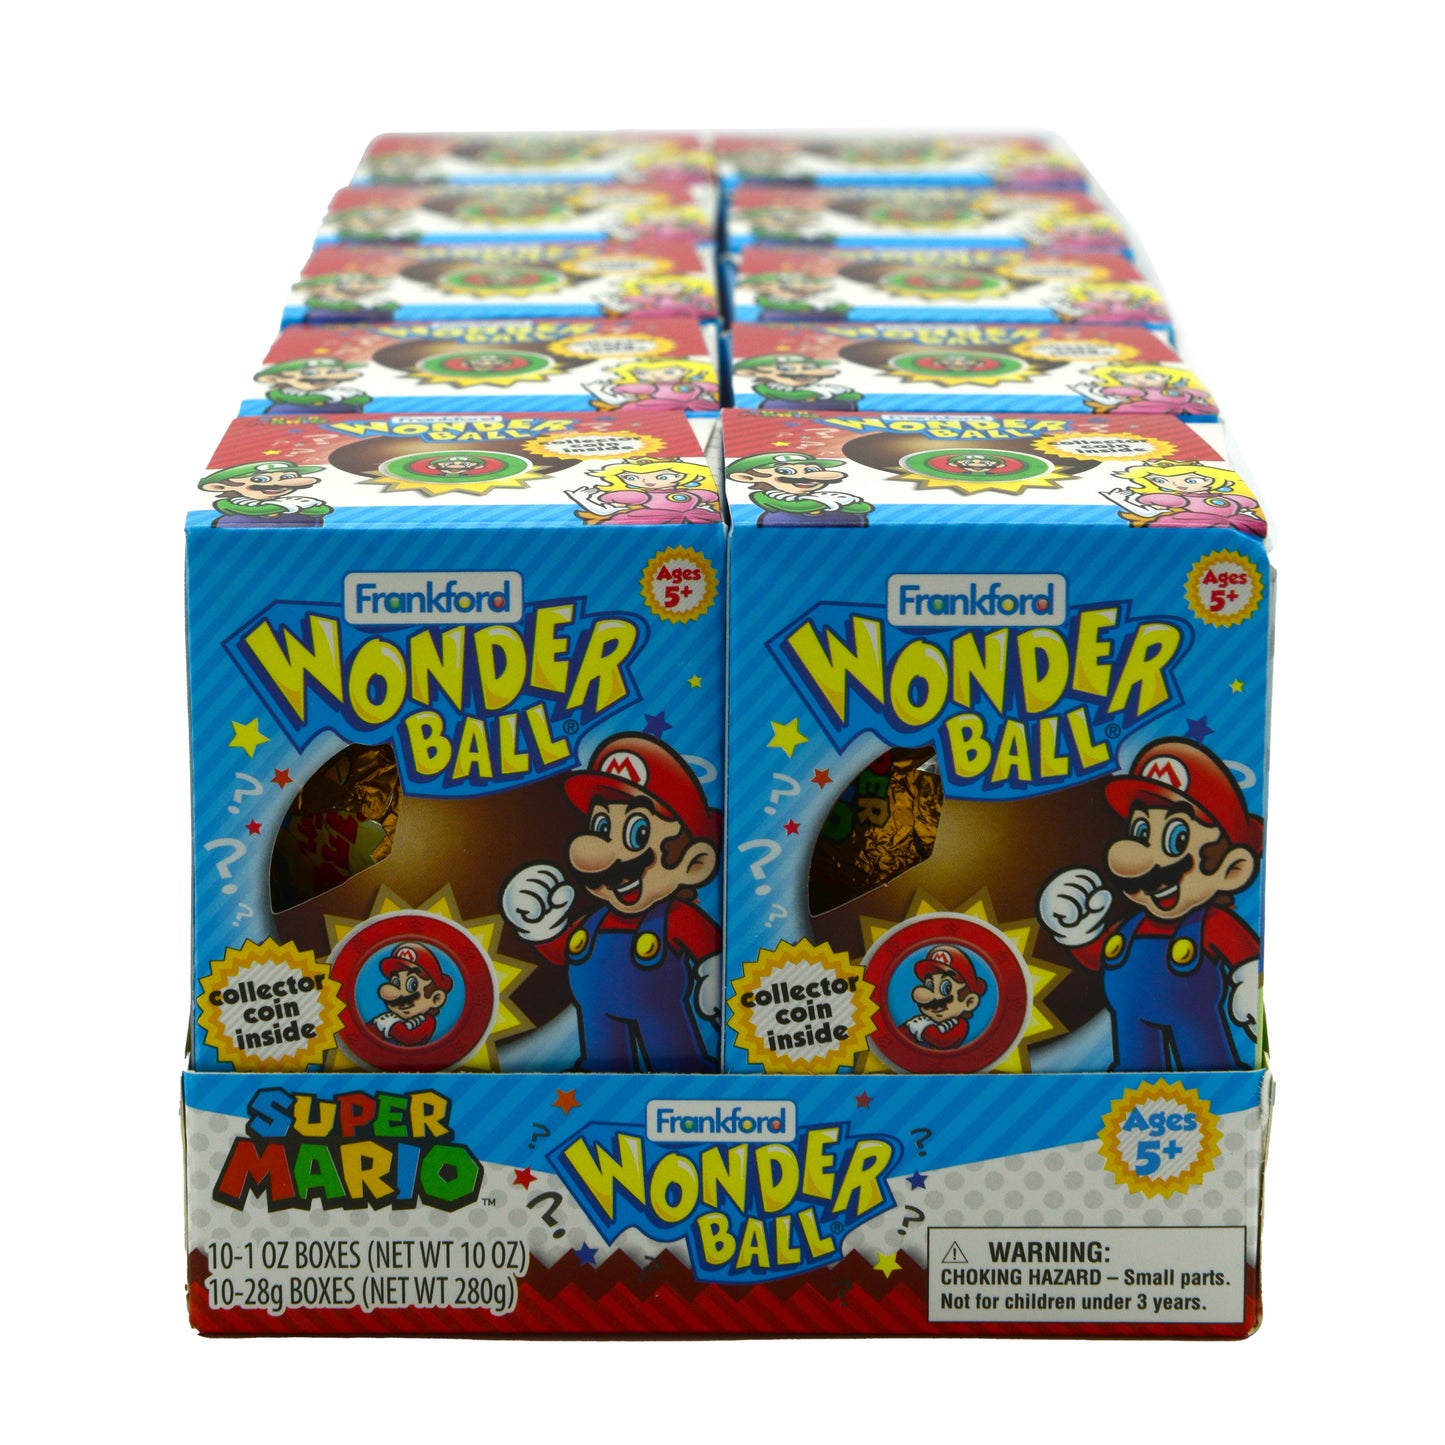 Blue display box with 10 individual blue boxes of Super Mario Wonderballs